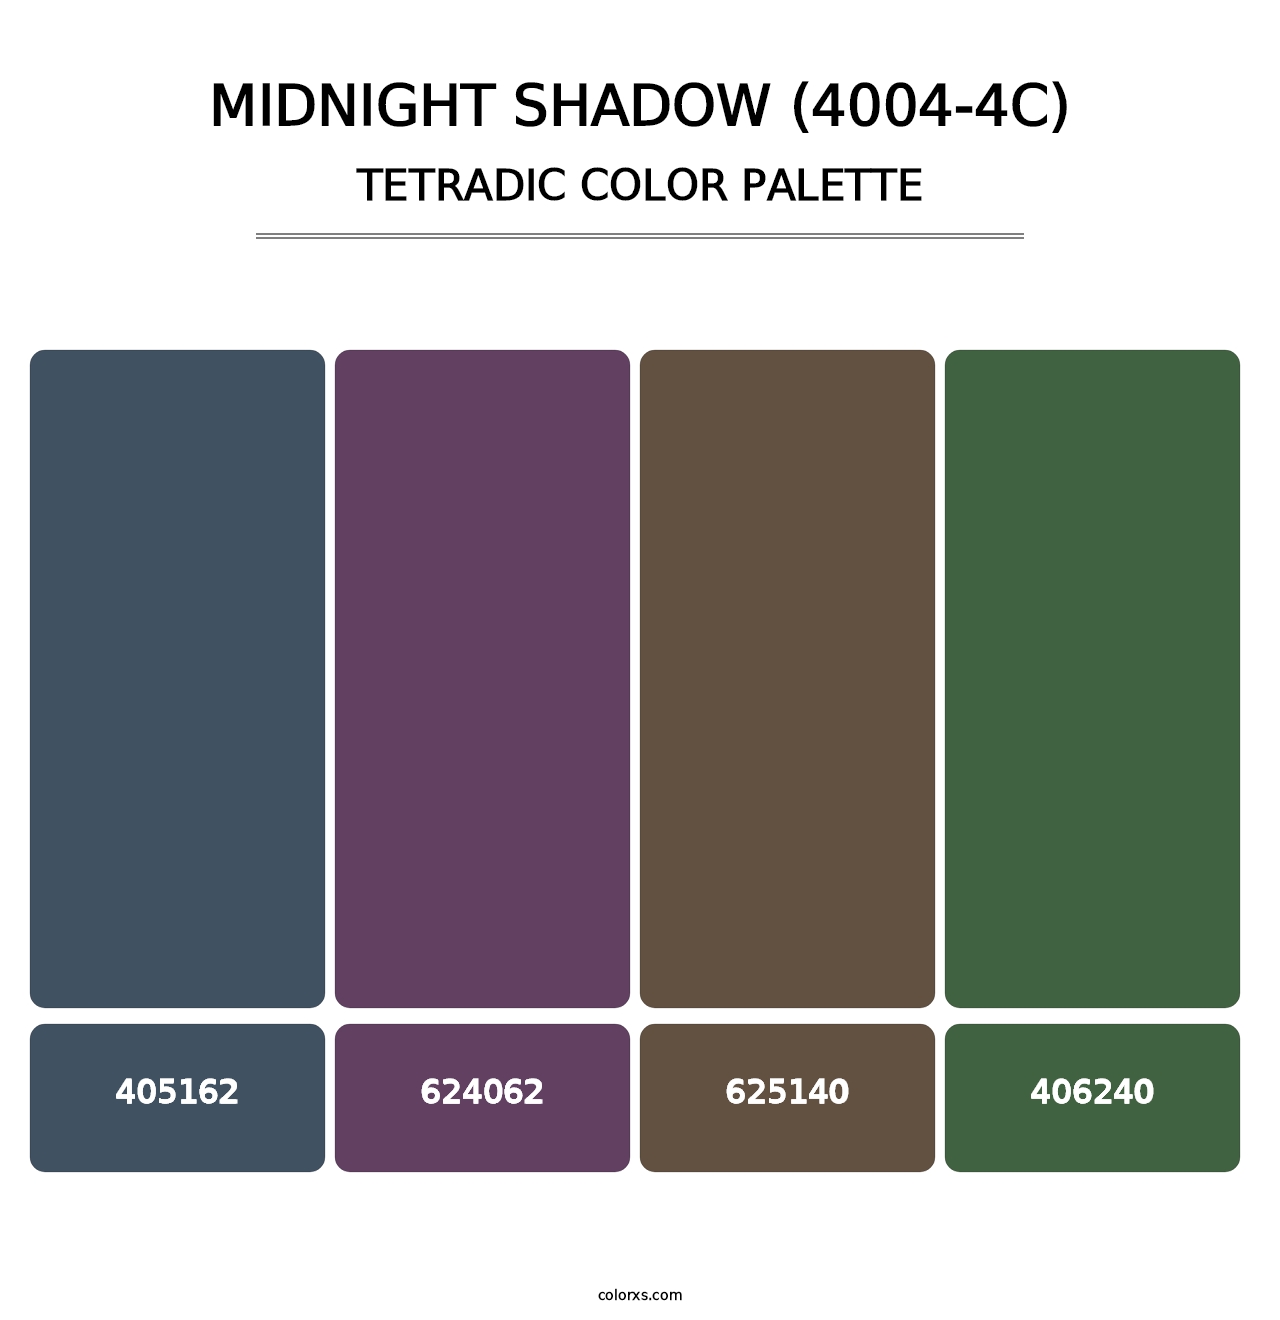 Midnight Shadow (4004-4C) - Tetradic Color Palette